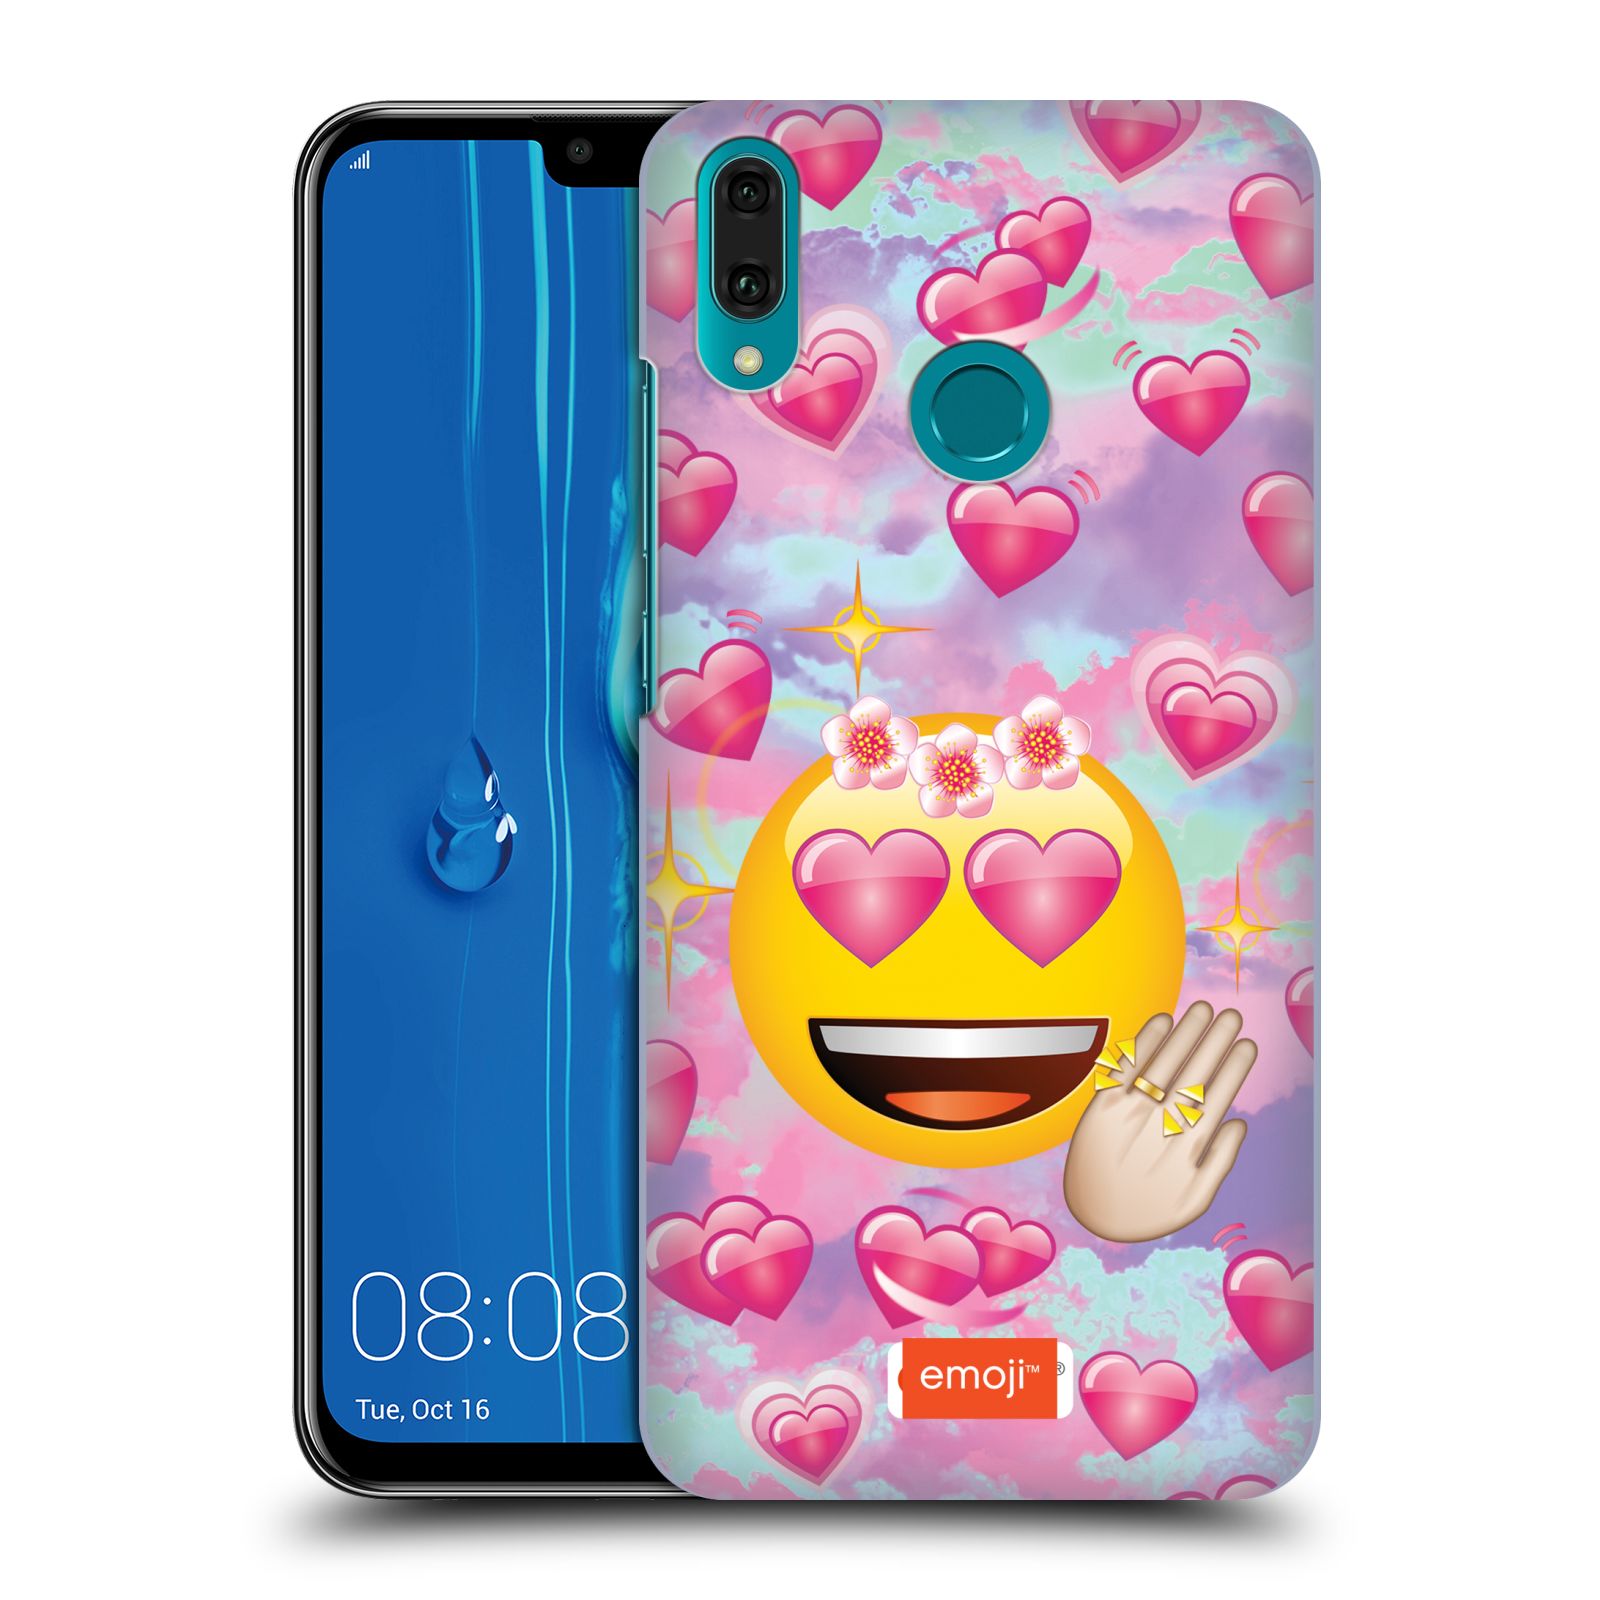 Pouzdro na mobil Huawei Y9 2019 - HEAD CASE - smajlík oficiální kryt EMOJI velký smajlík růžová srdíčka